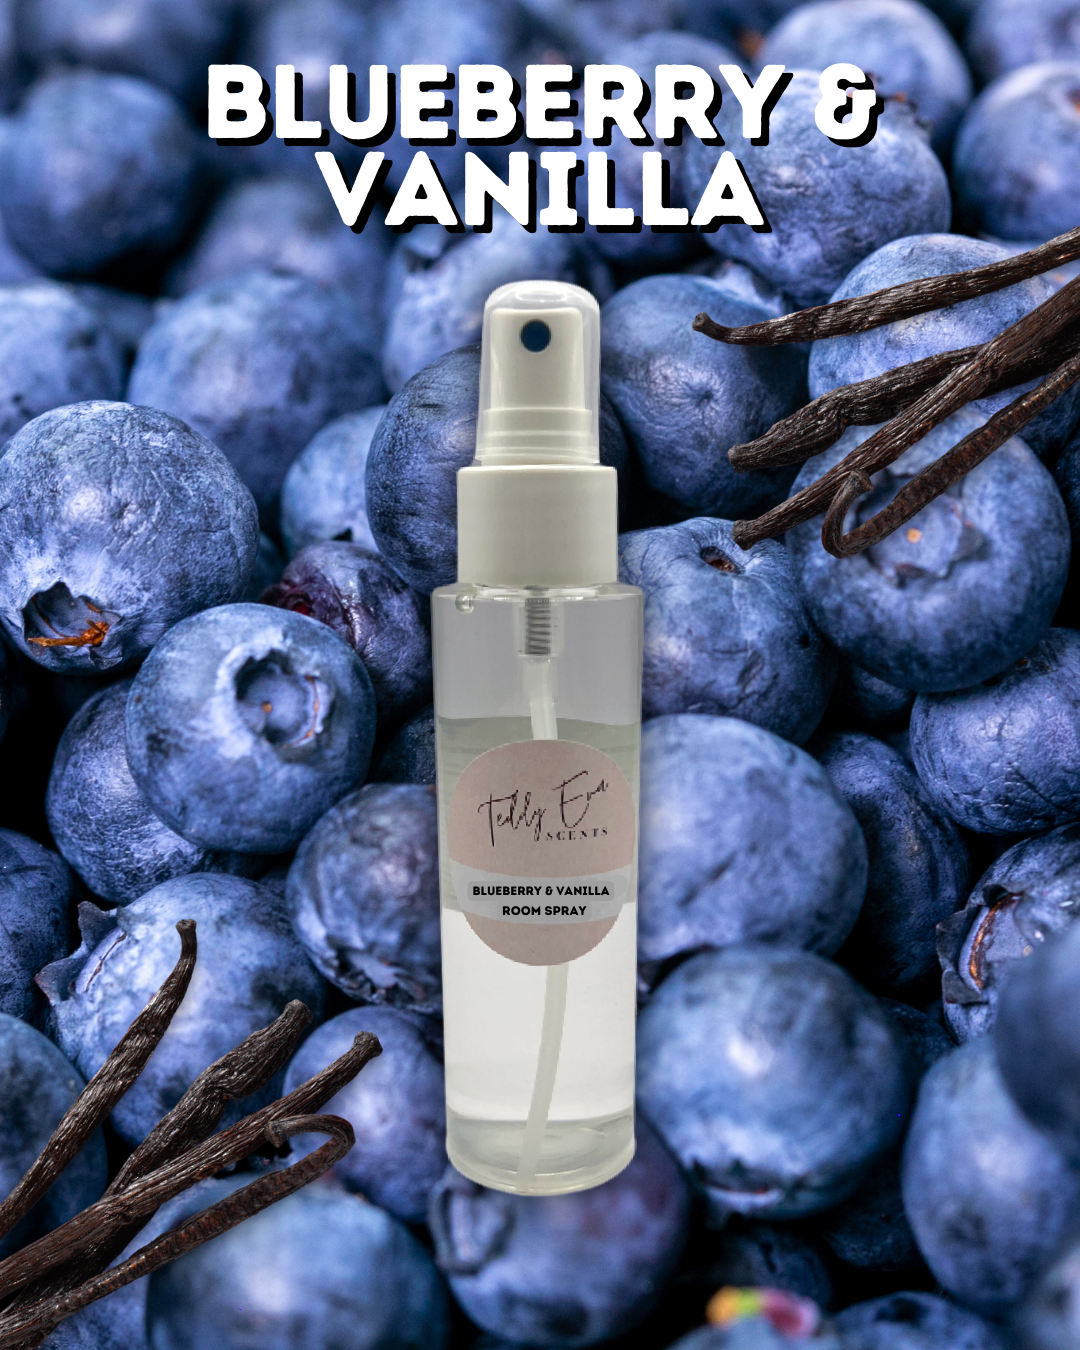 Blueberry & Vanilla room spray